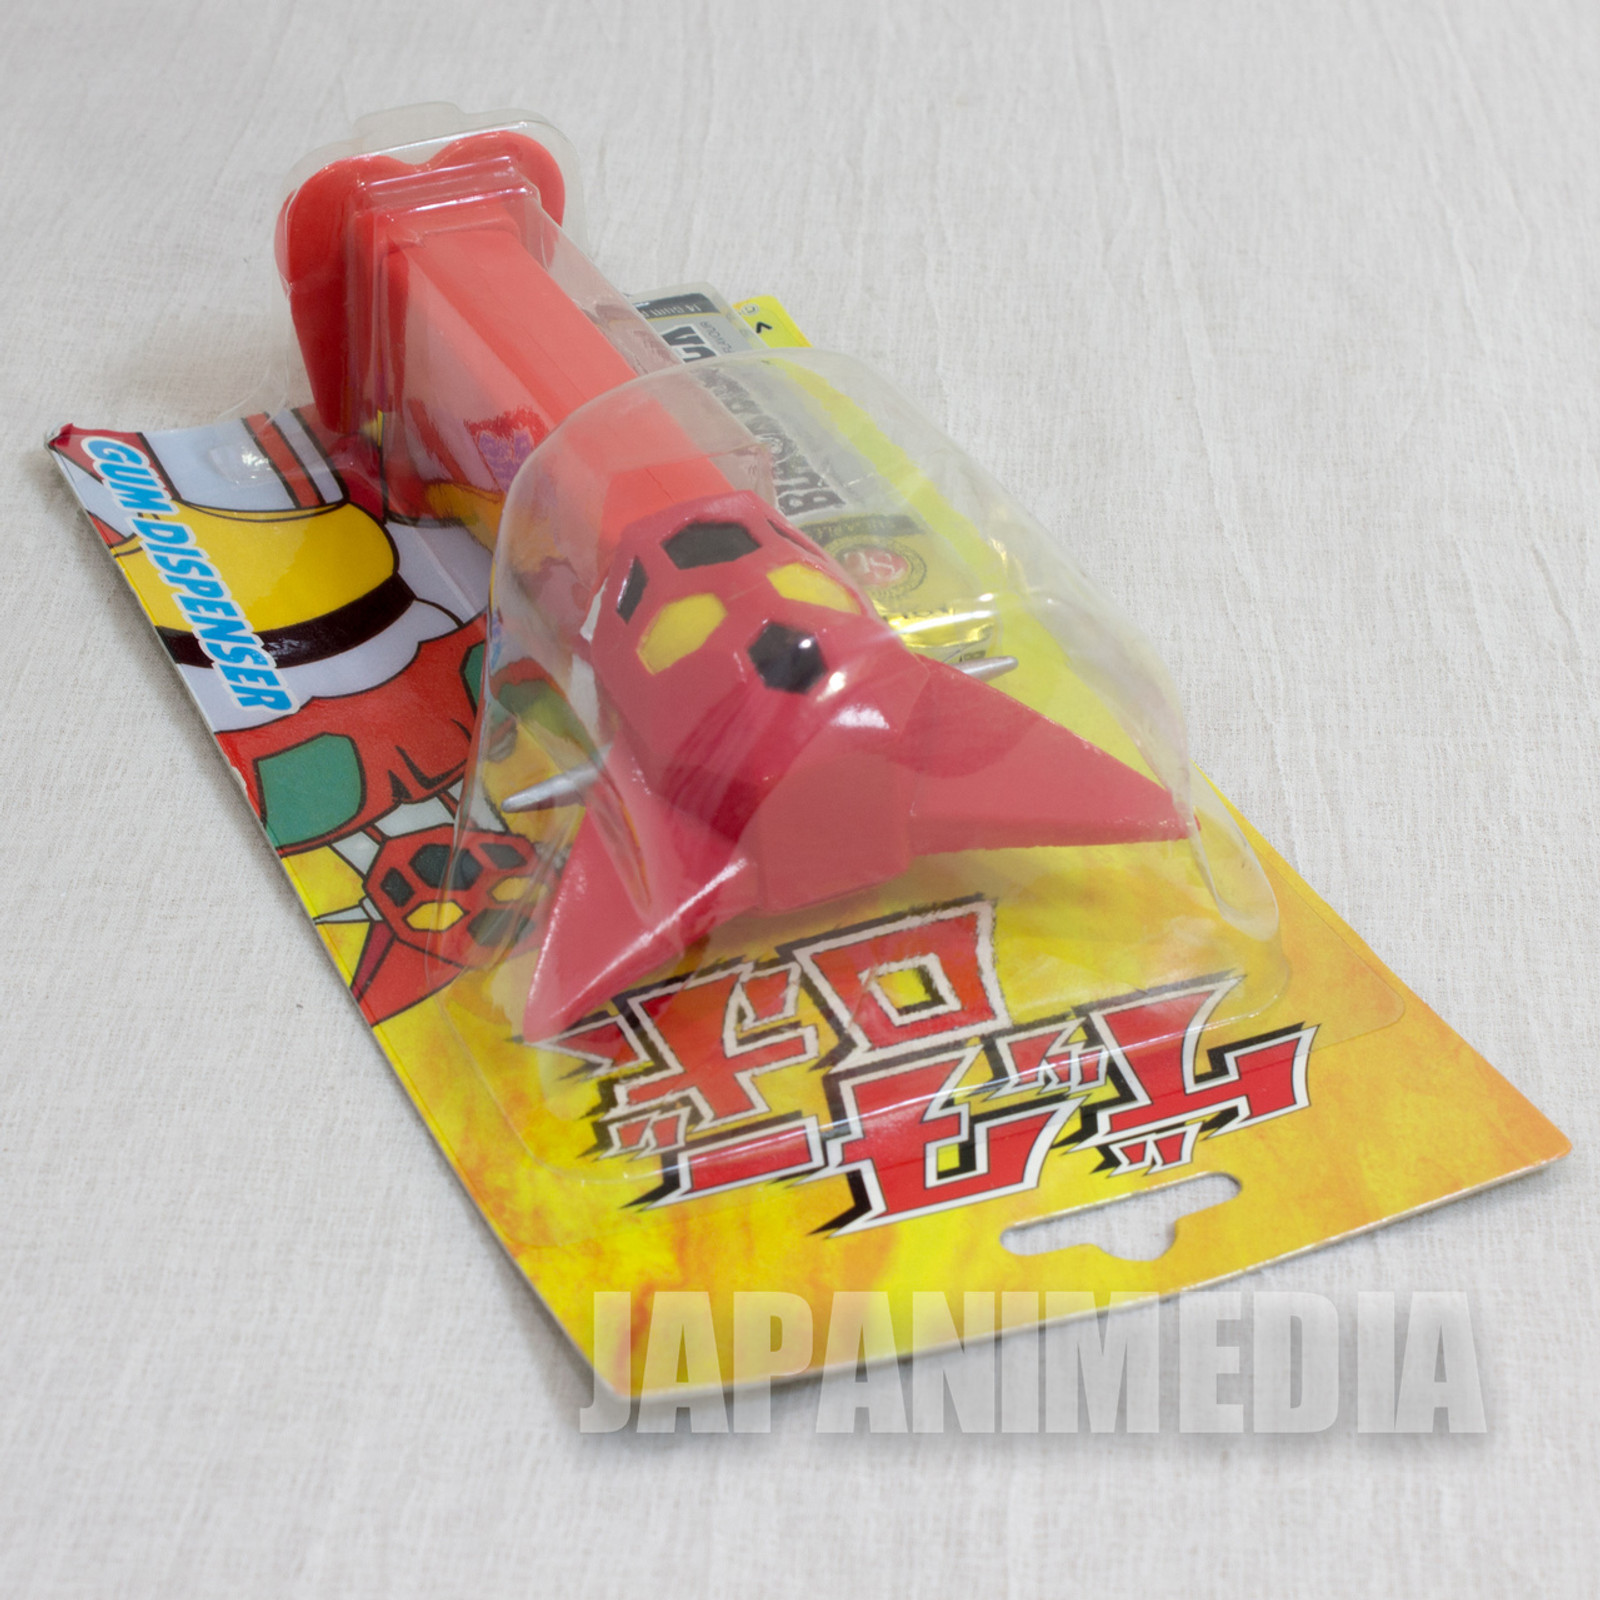 RARE! Getter Robo #1 Ver. Gum Dispenser 6" Figure JAPAN GAME PEZ